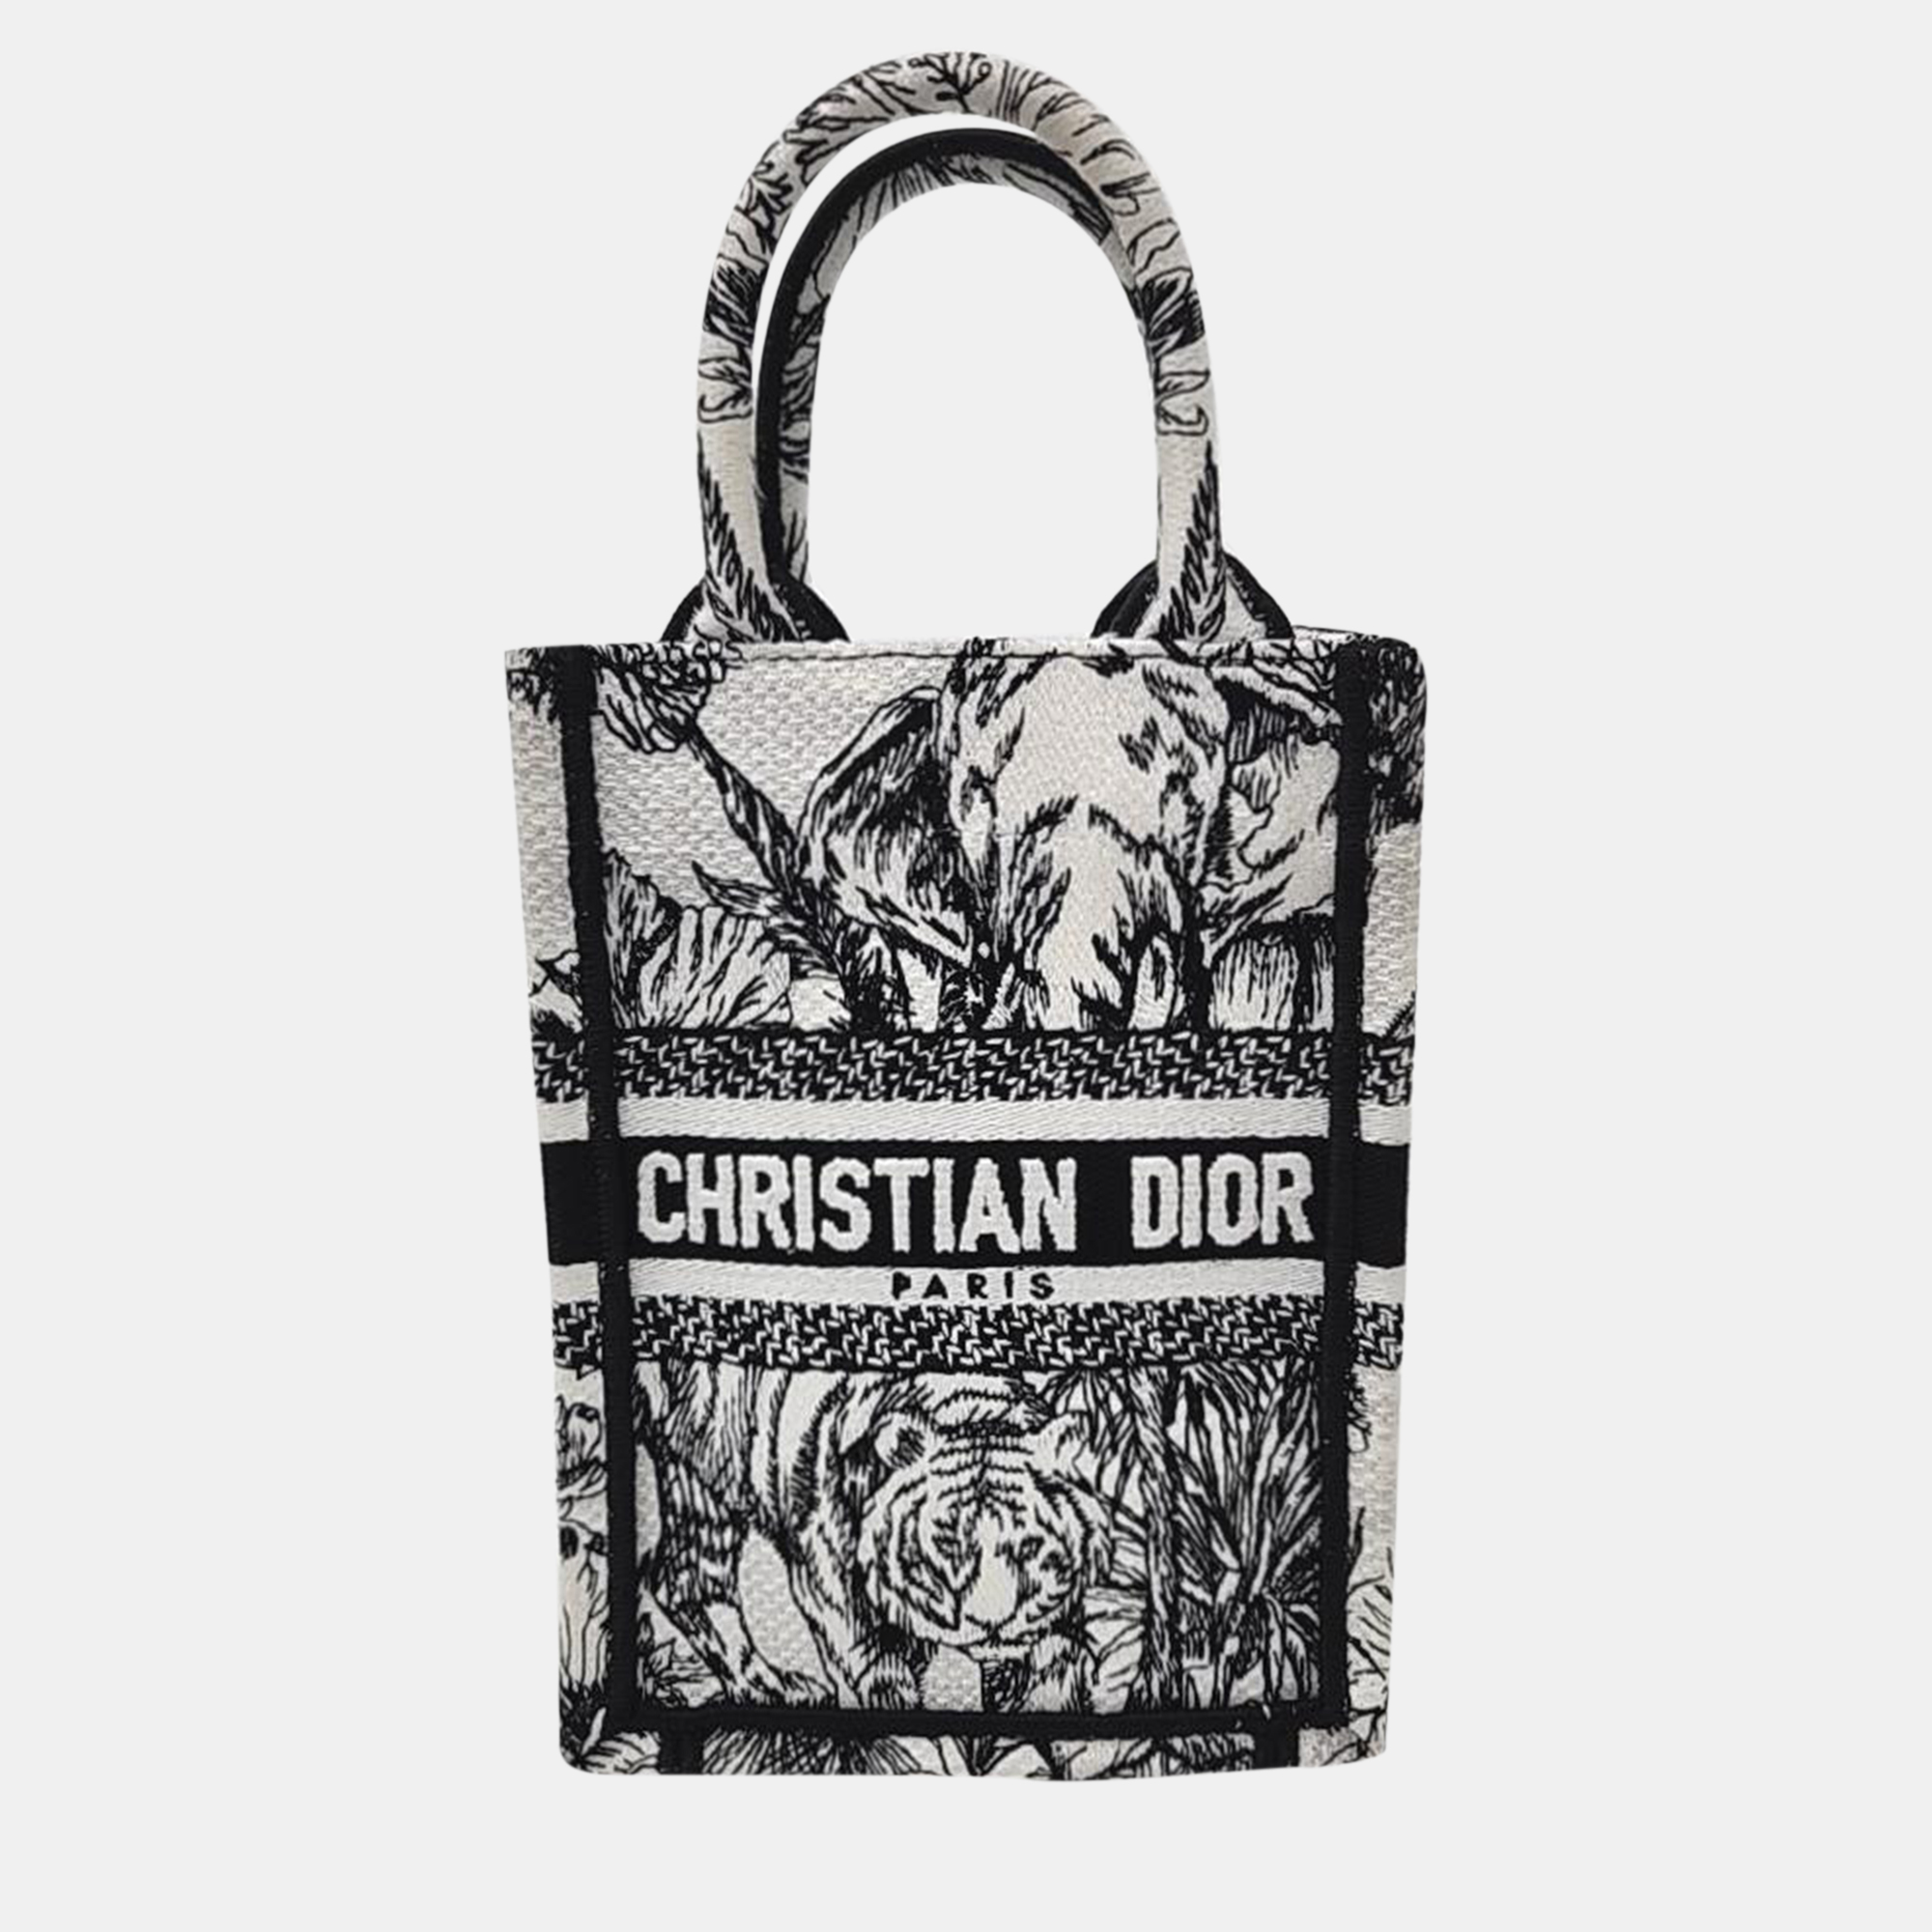 Christian dior book tote mini phone bag